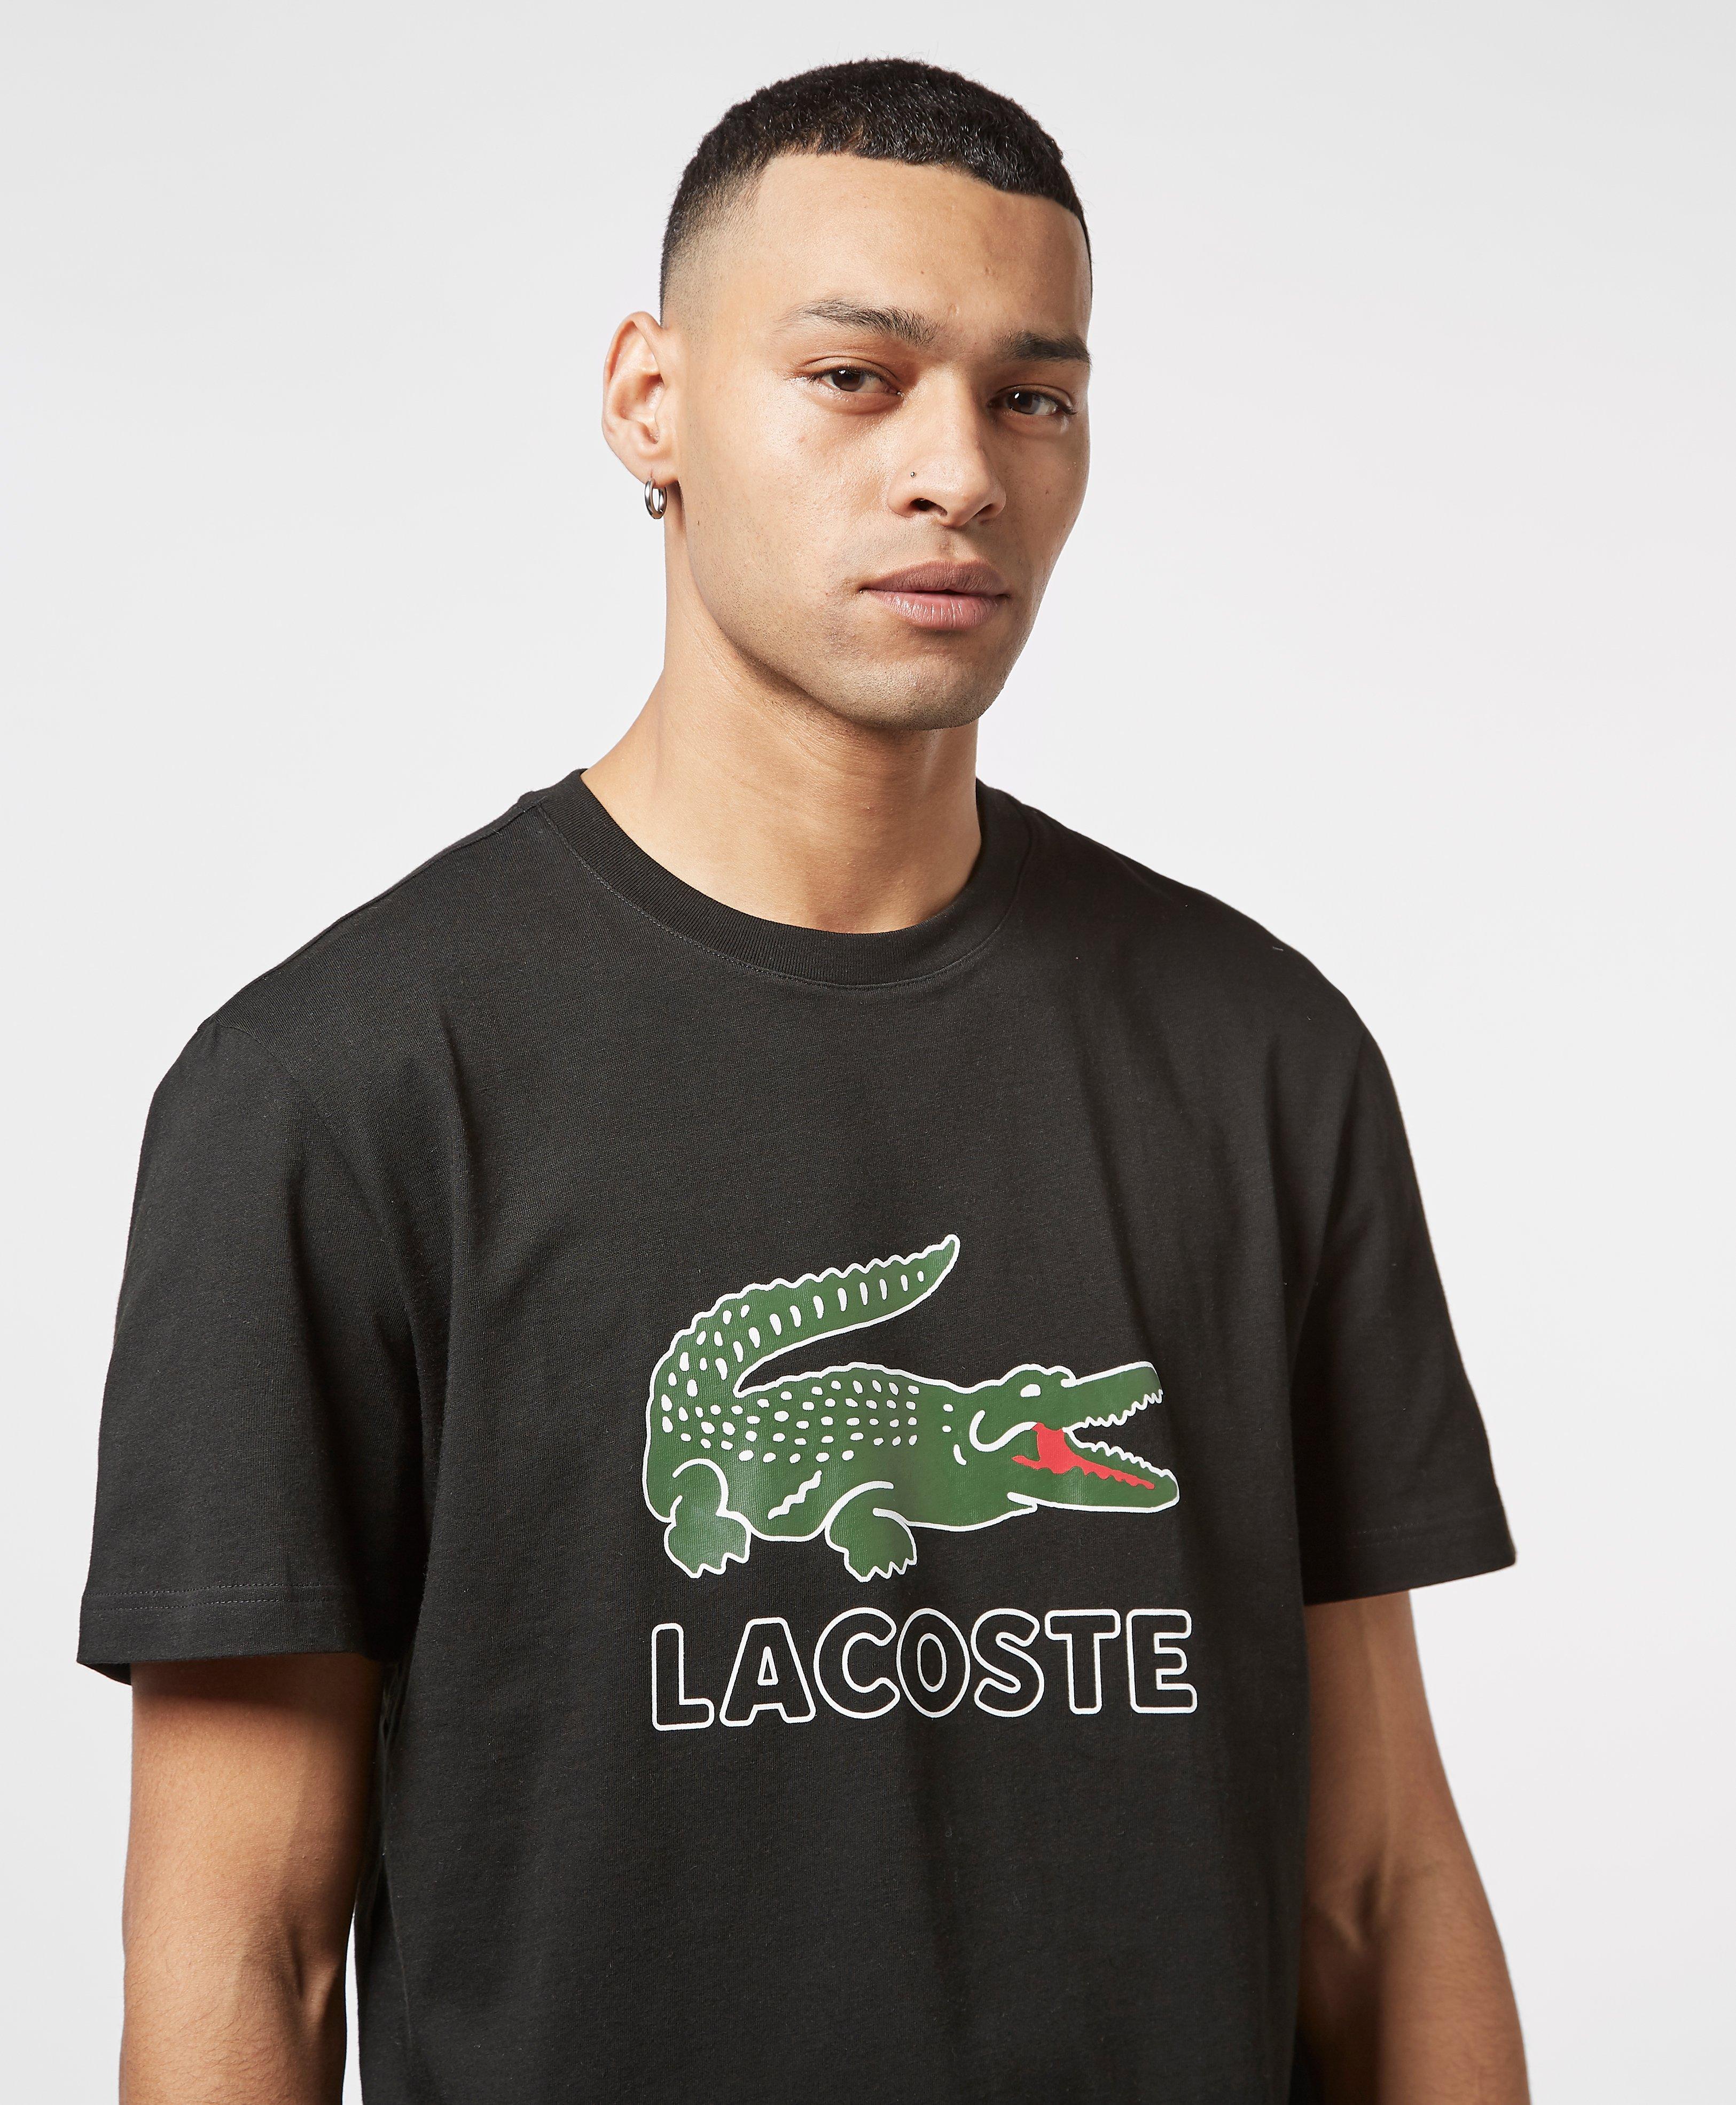 Lacoste Cotton Large Croc Print T-shirt In Black for Men - Lyst